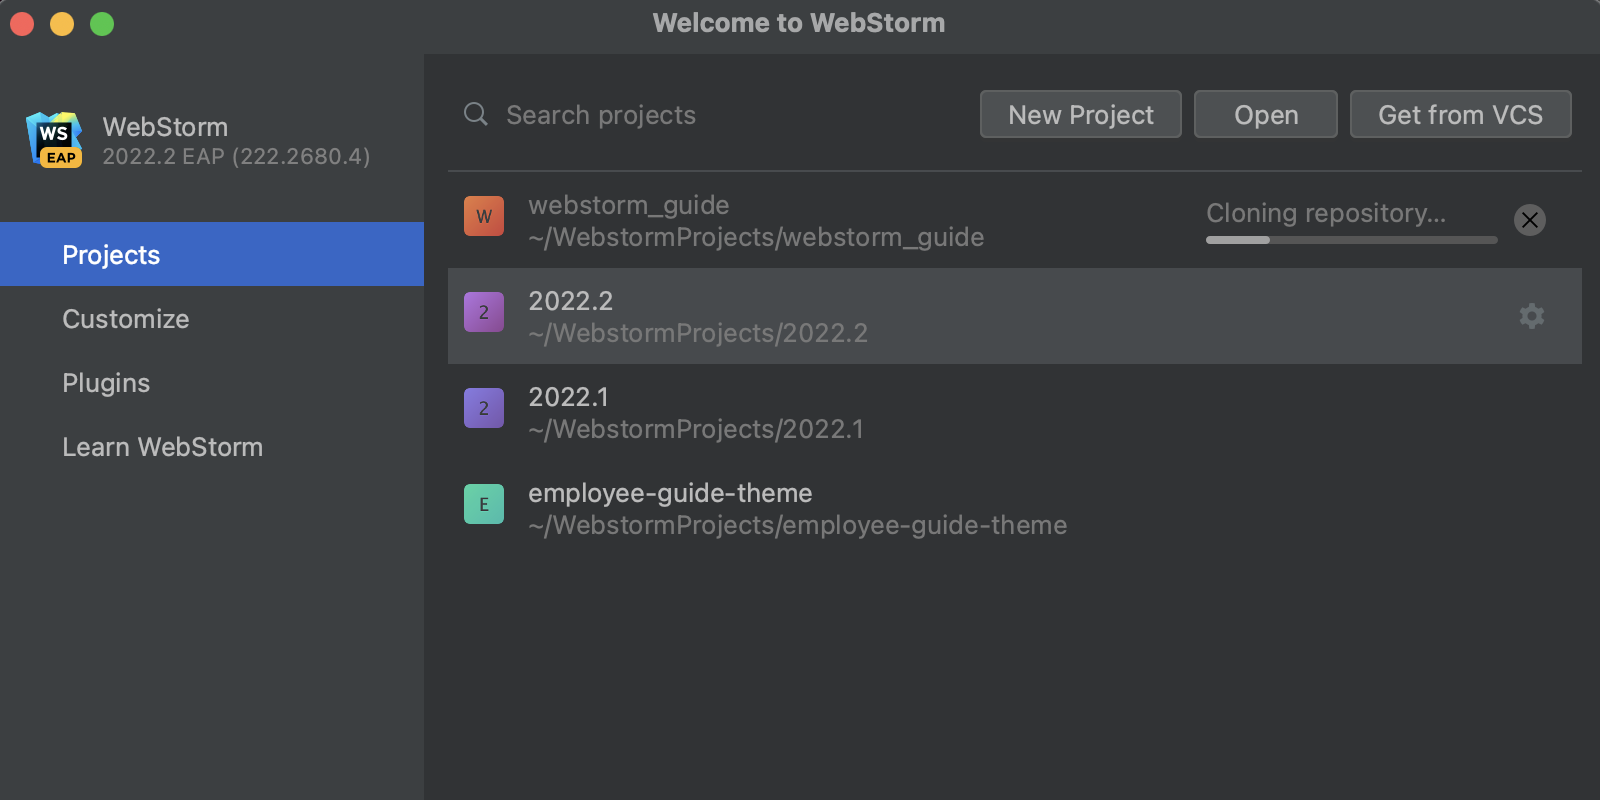 Clone repository in Welcome screen